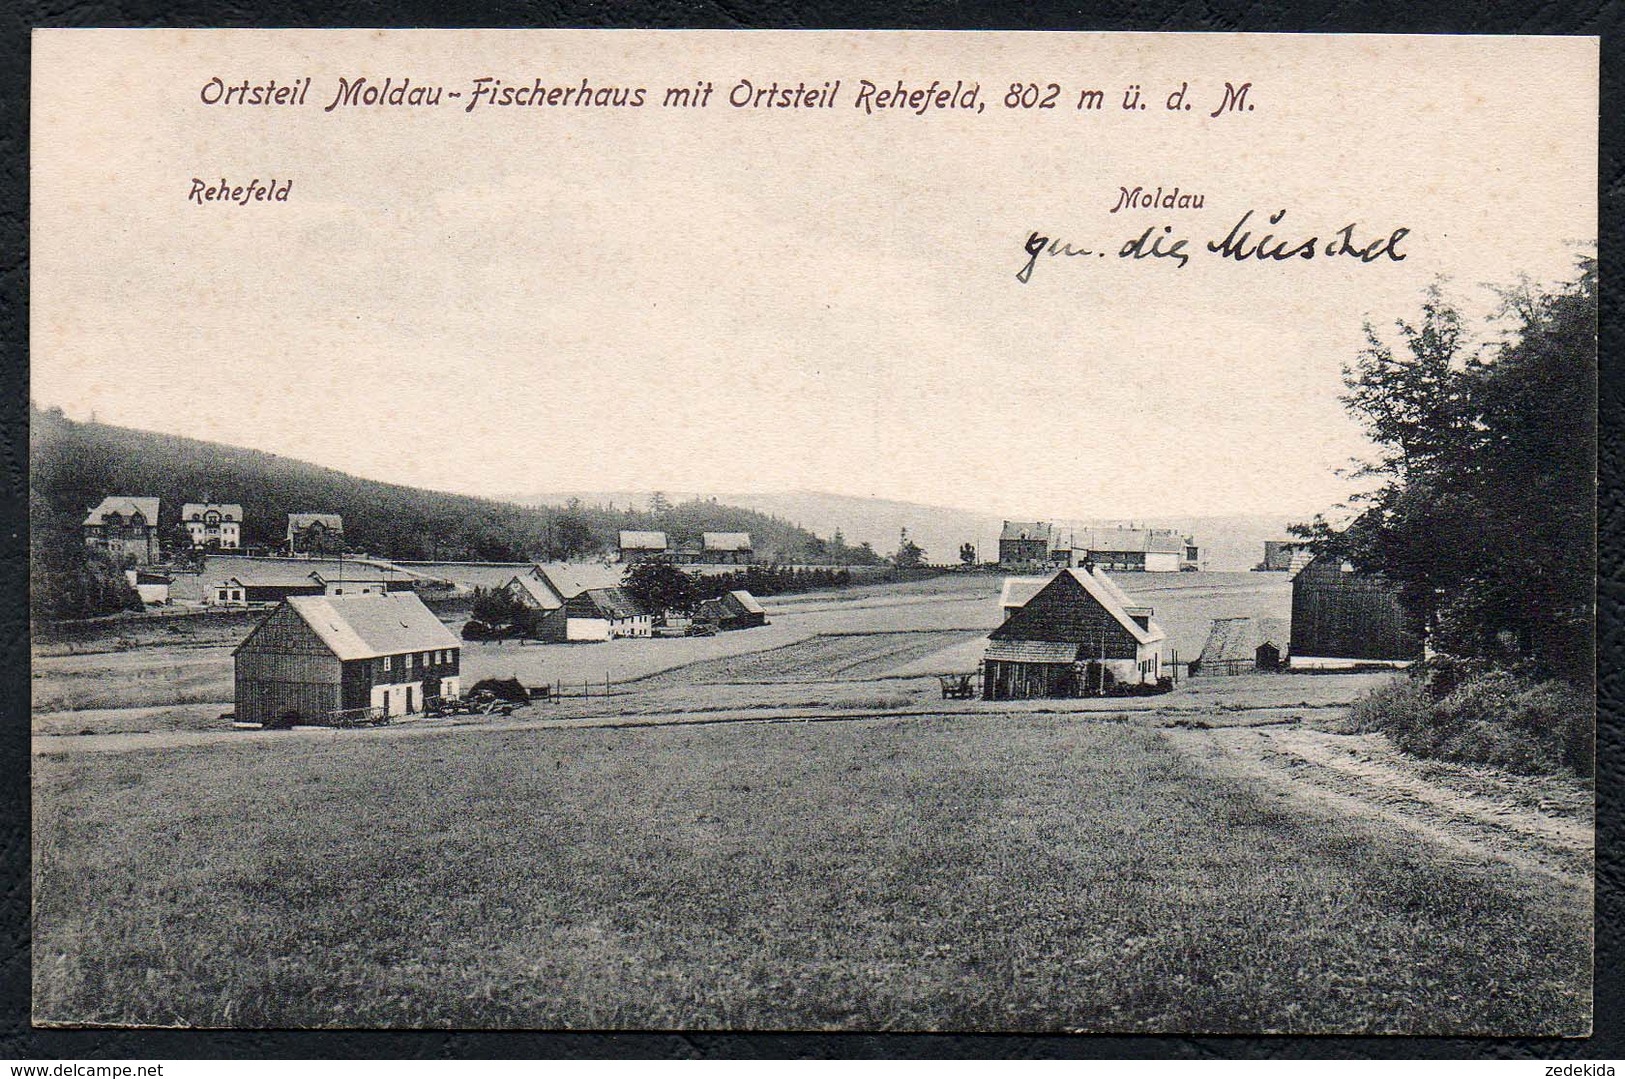 C3533 - Rehefeld OT Moldau Fischerhaus - Jakob Morlock - Rehefeld